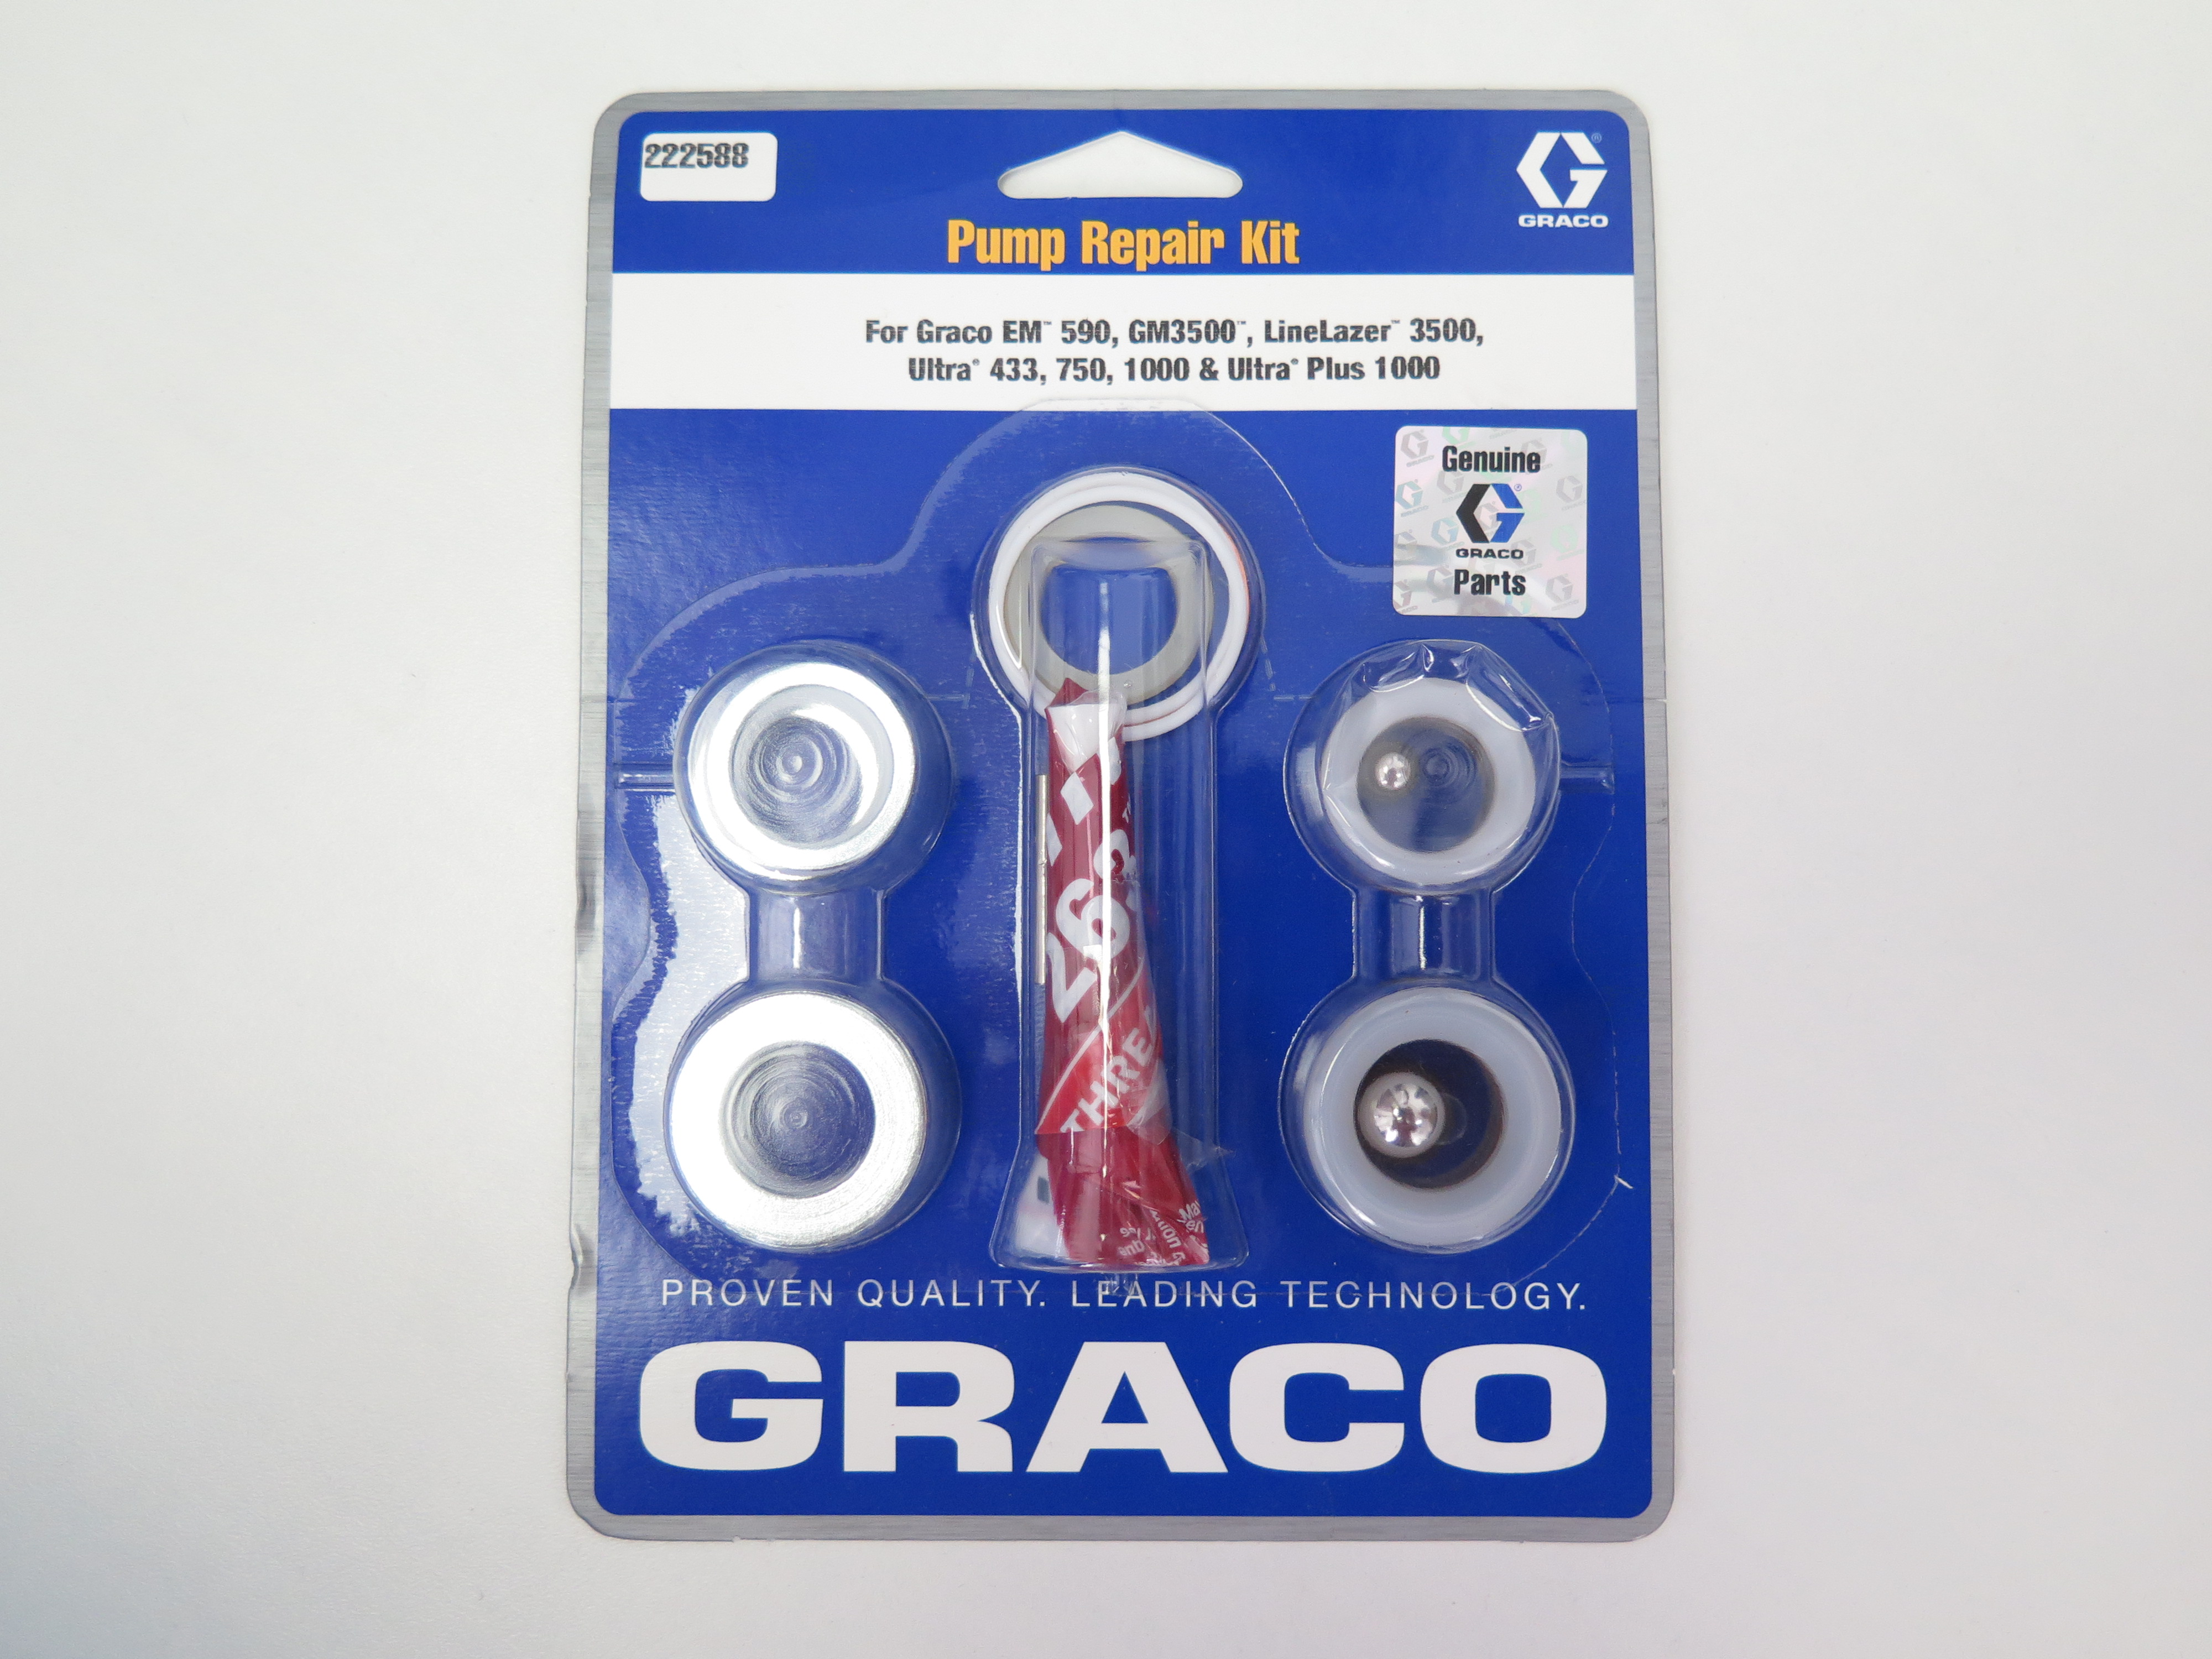 GRACO Original Unterpumpen Reparatursatz für Ultra 1000 - 222588